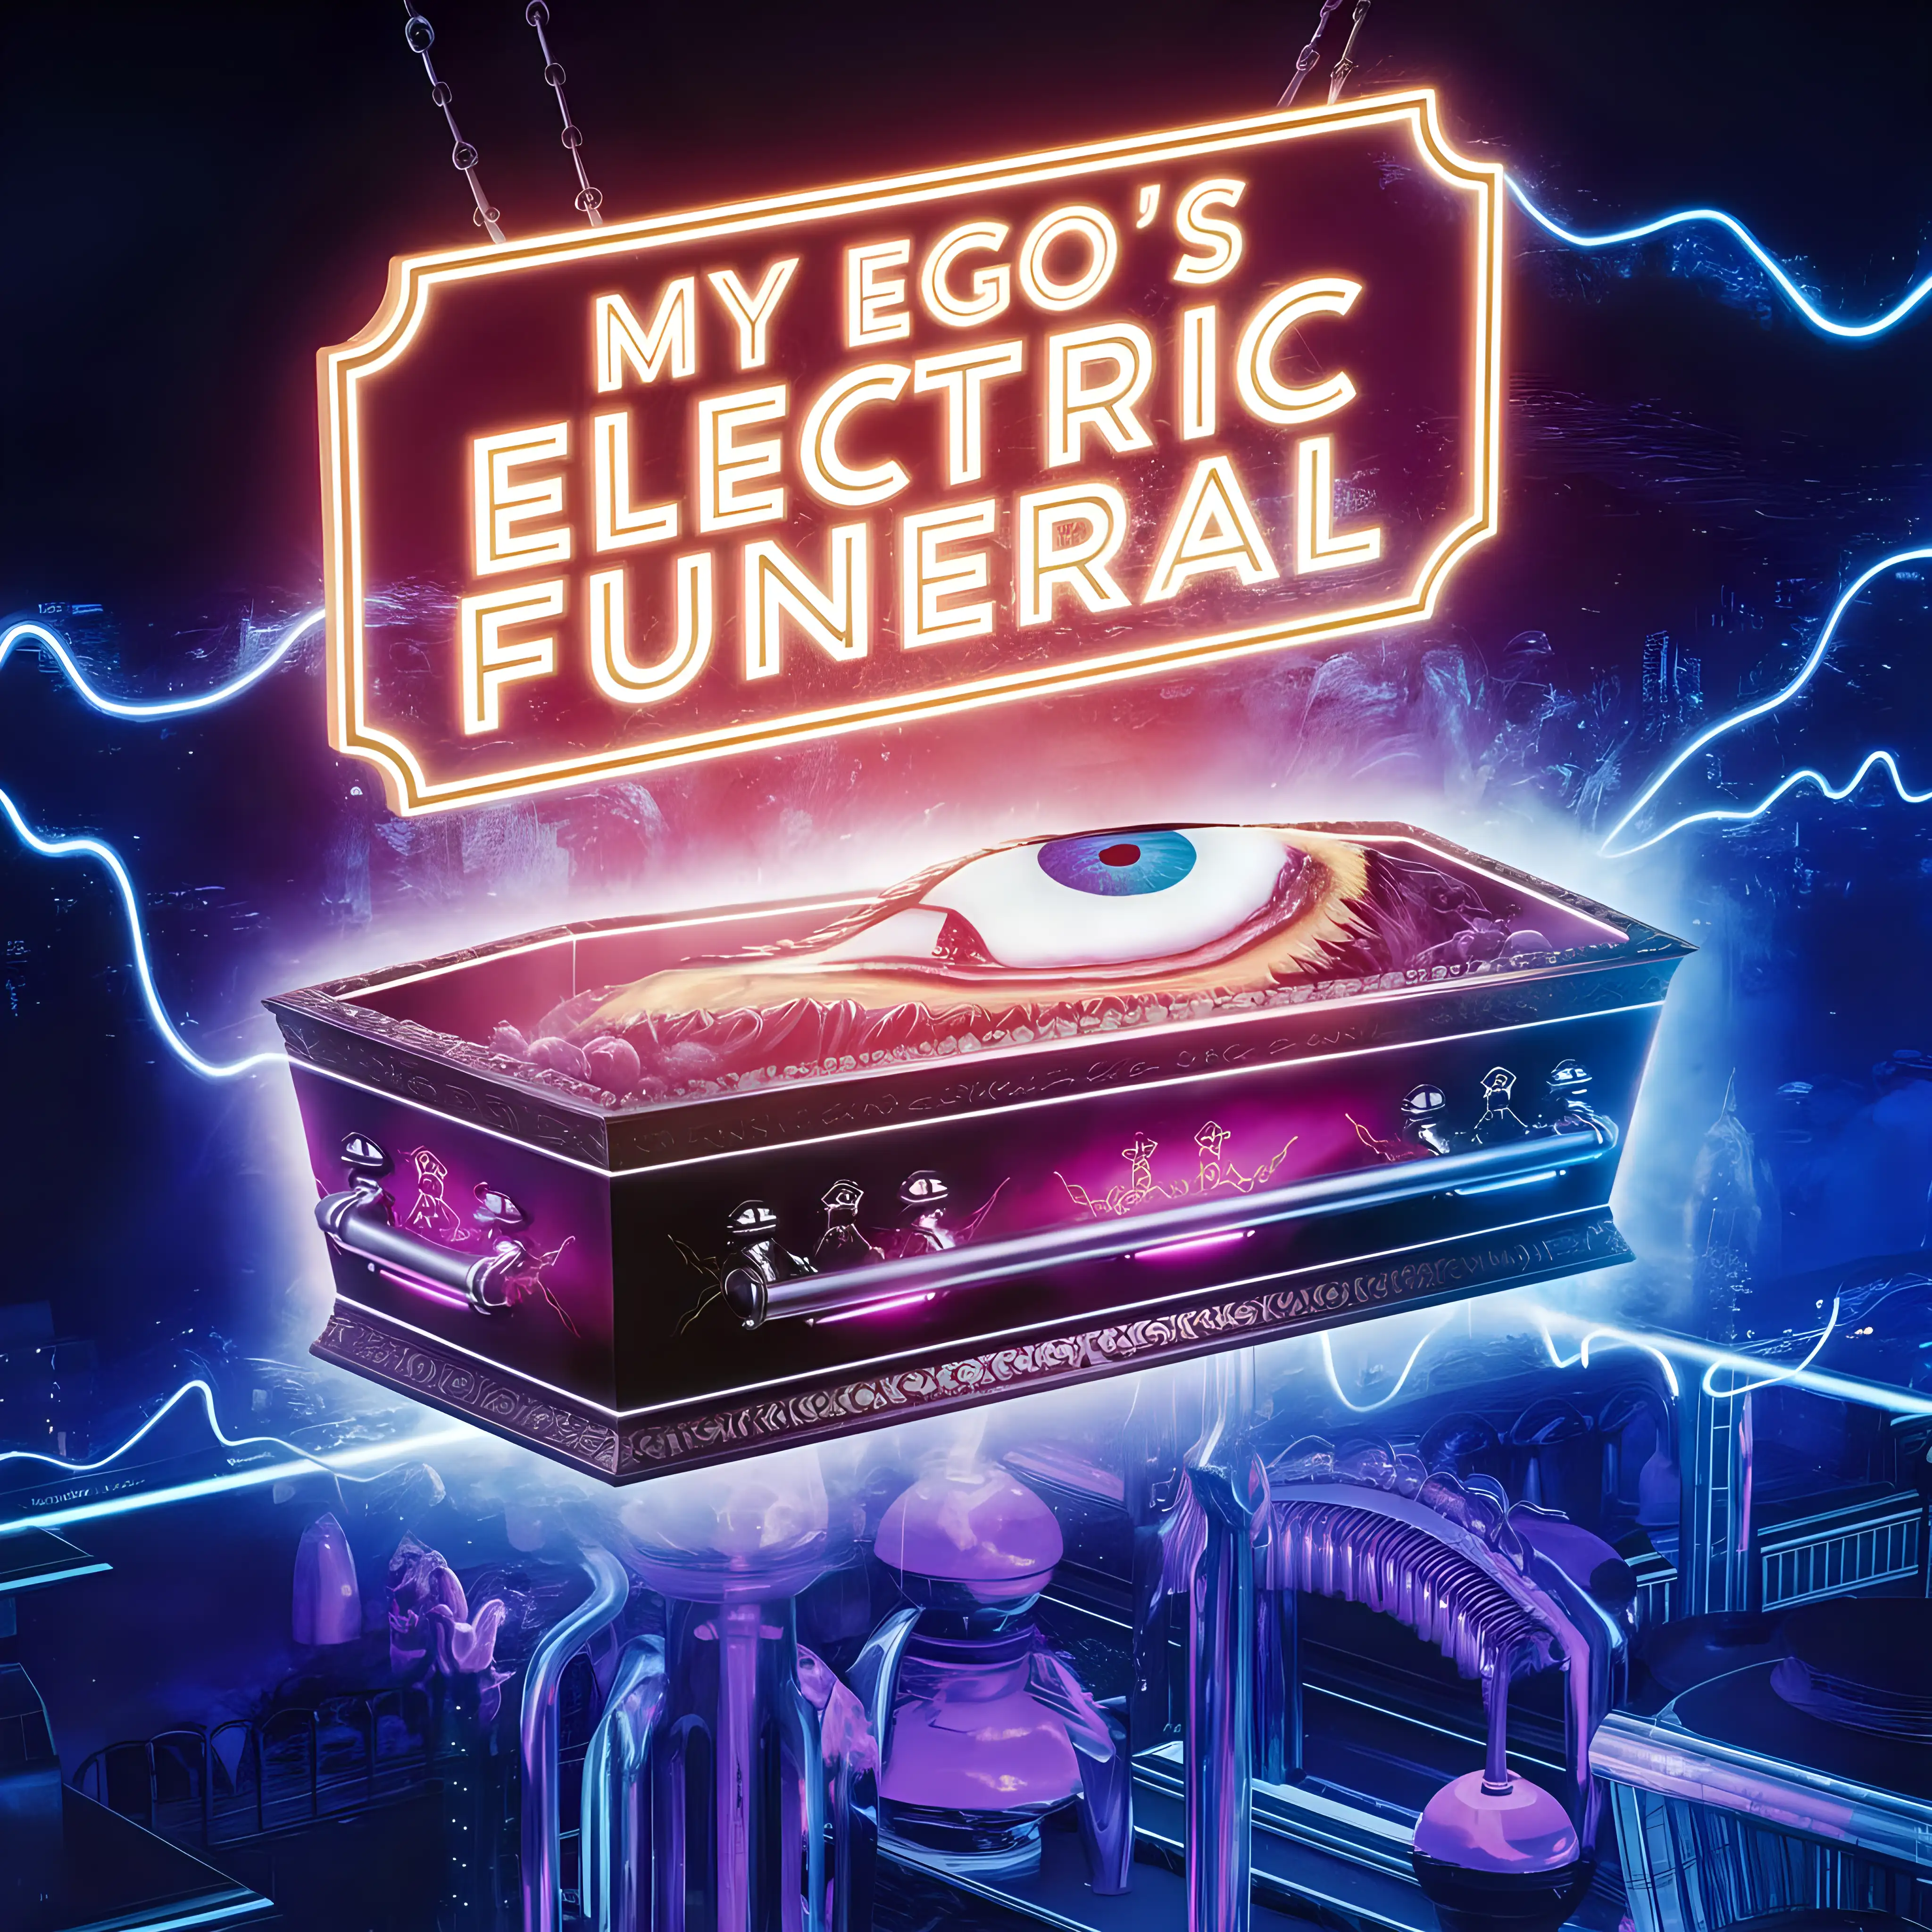 Neon Electric Funeral Surreal Floating Casket Artwork